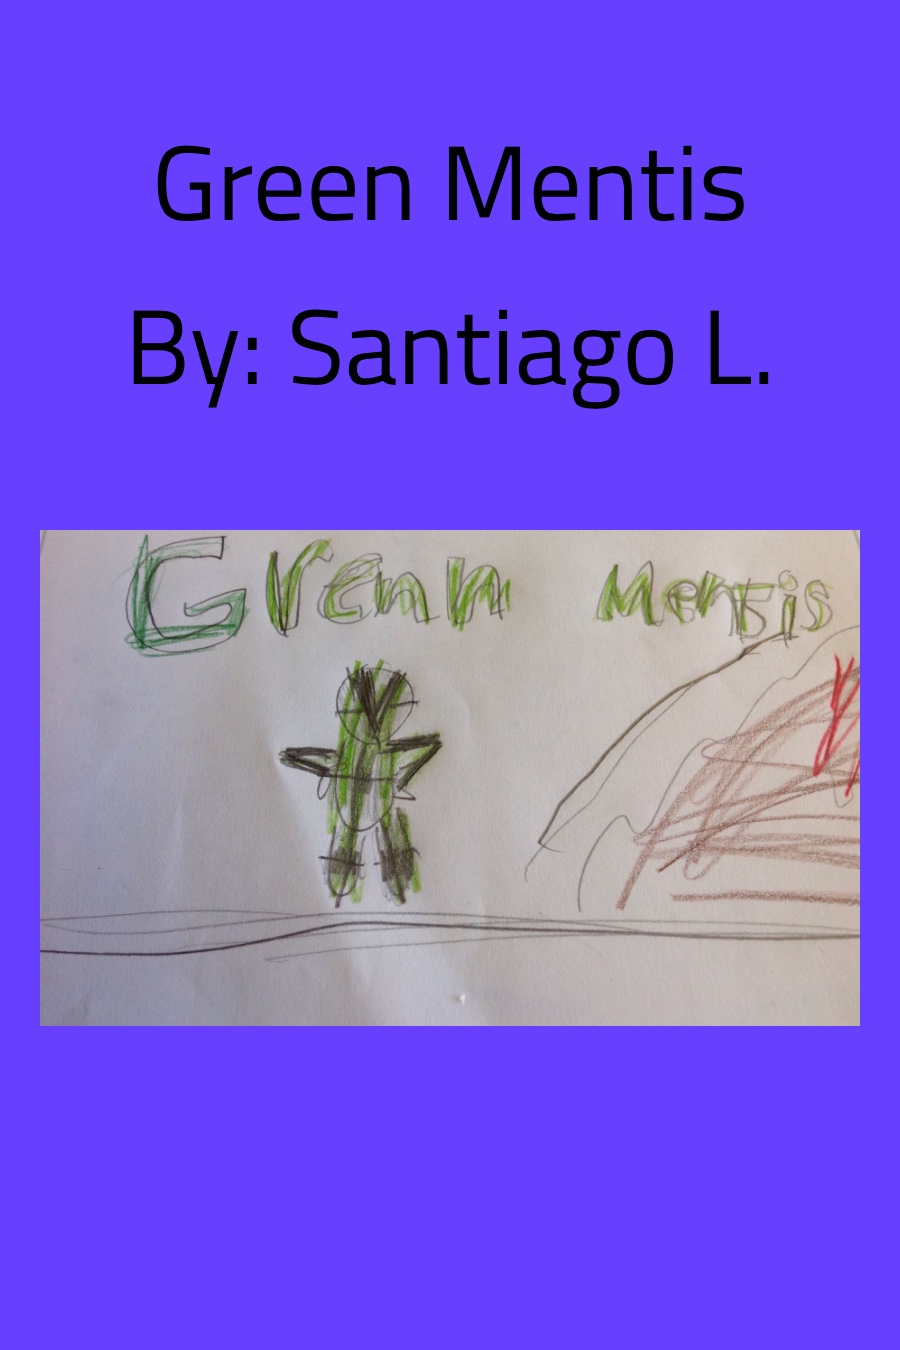 Green mentis by santiago l